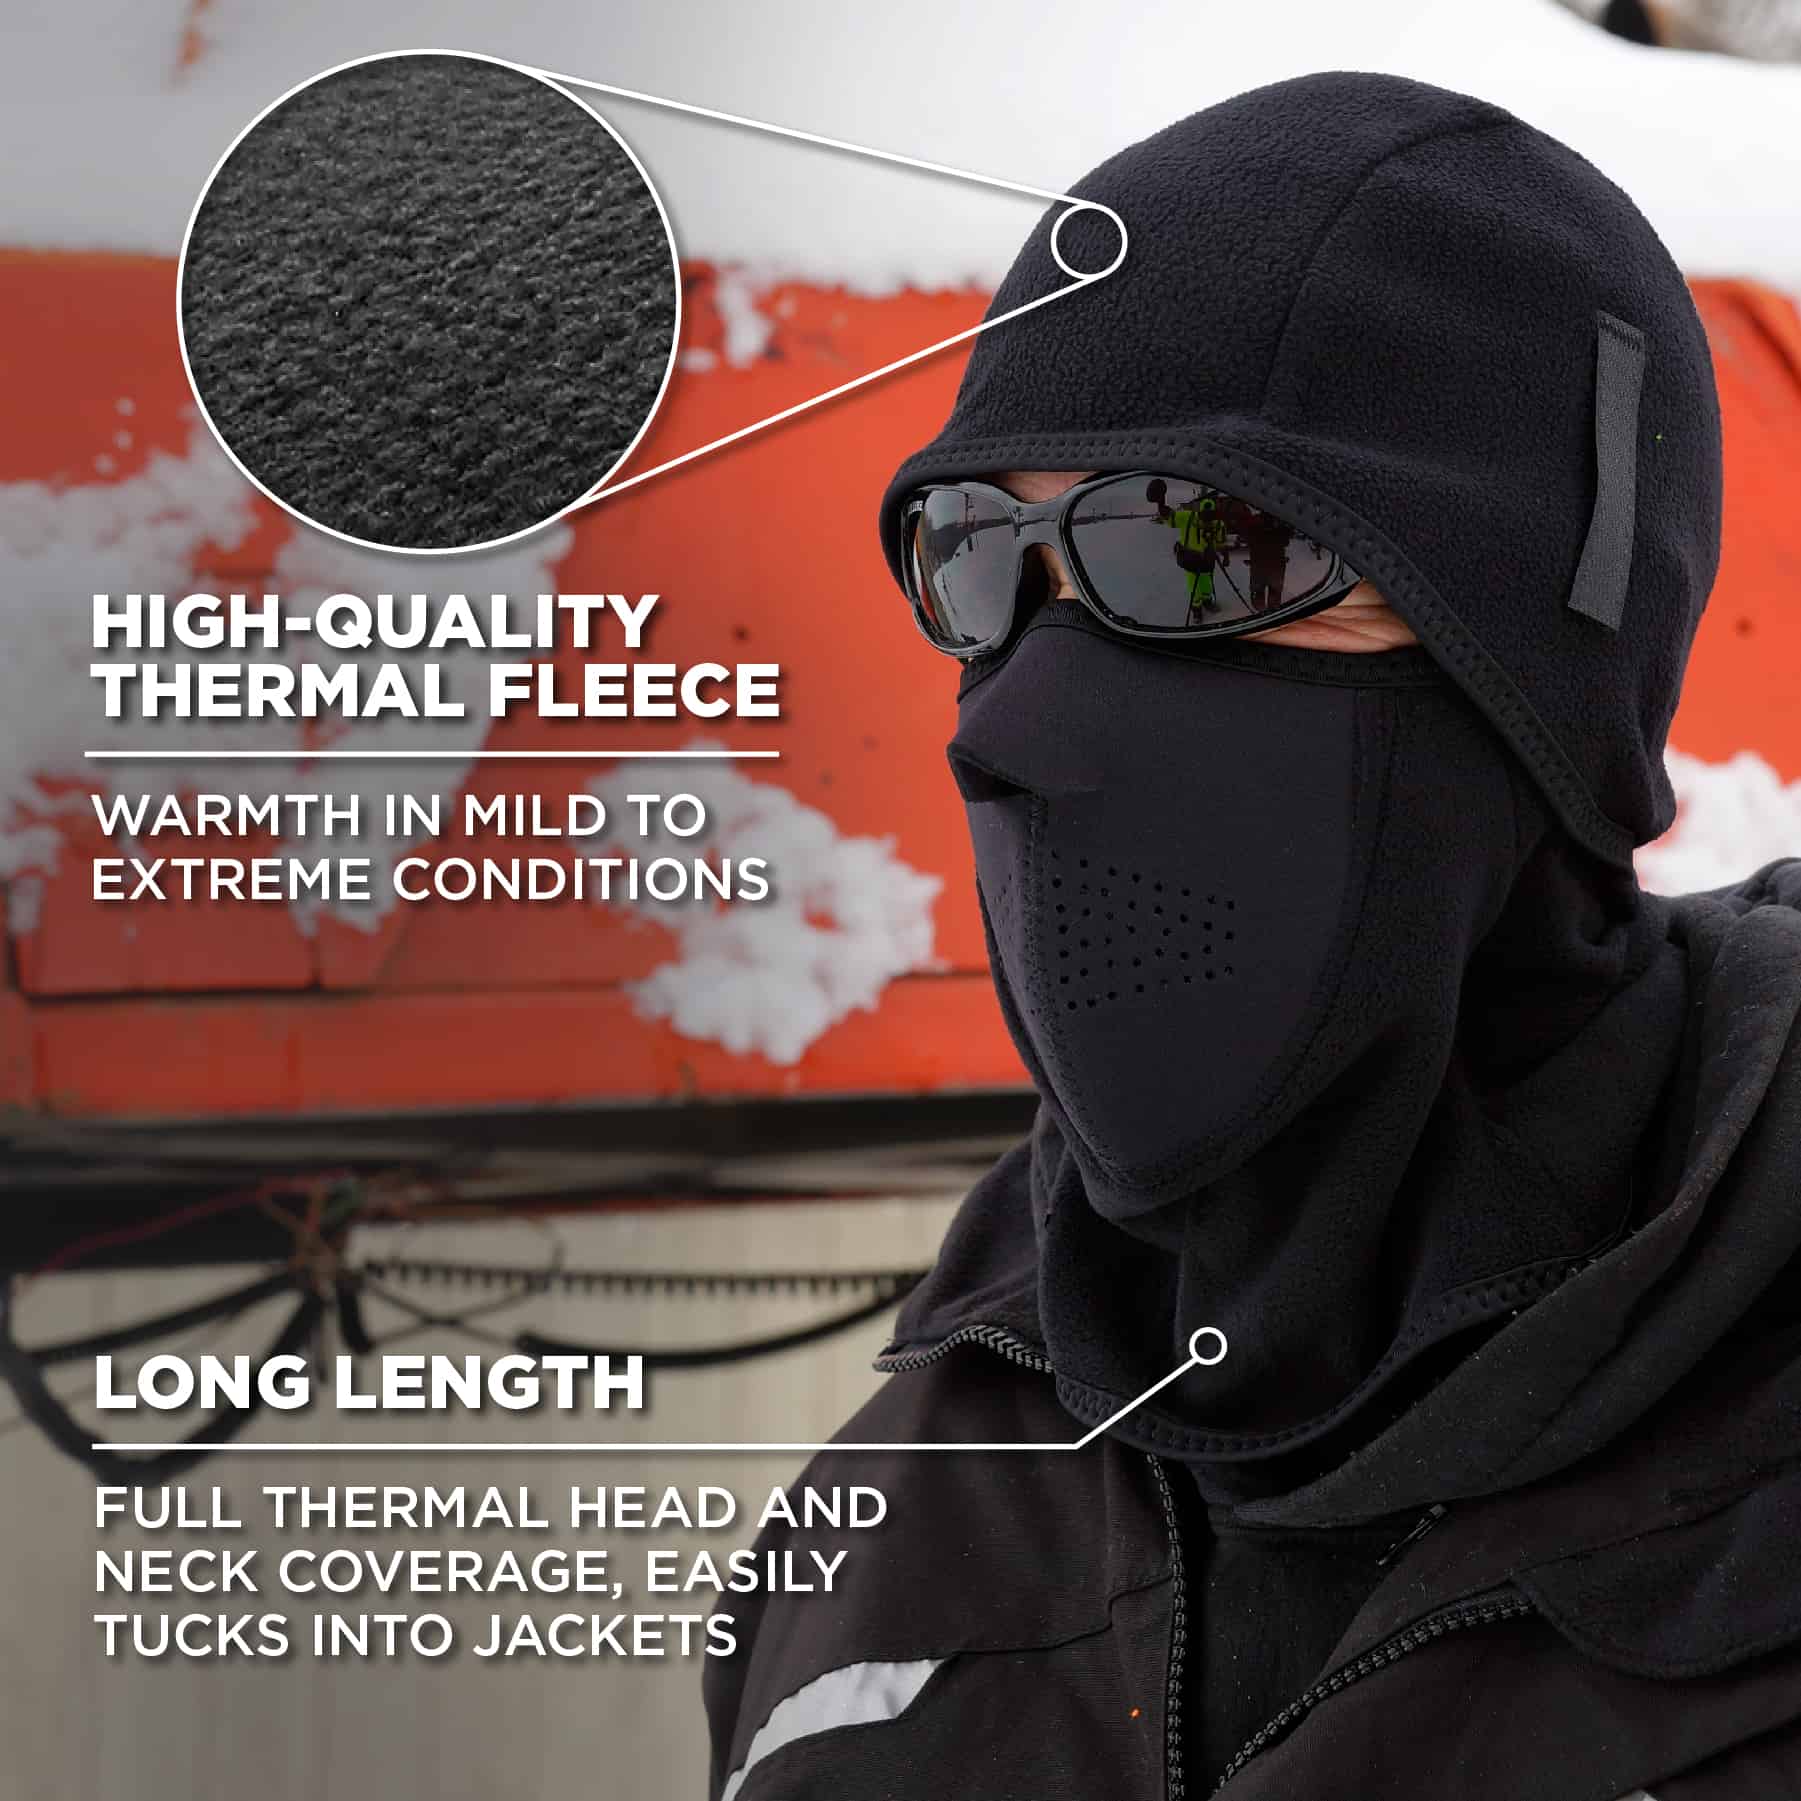 https://www.ergodyne.com/sites/default/files/product-images/16827-6827-balaclava-face-mask-black-high-quality-thermal-fleece-long-length.jpg